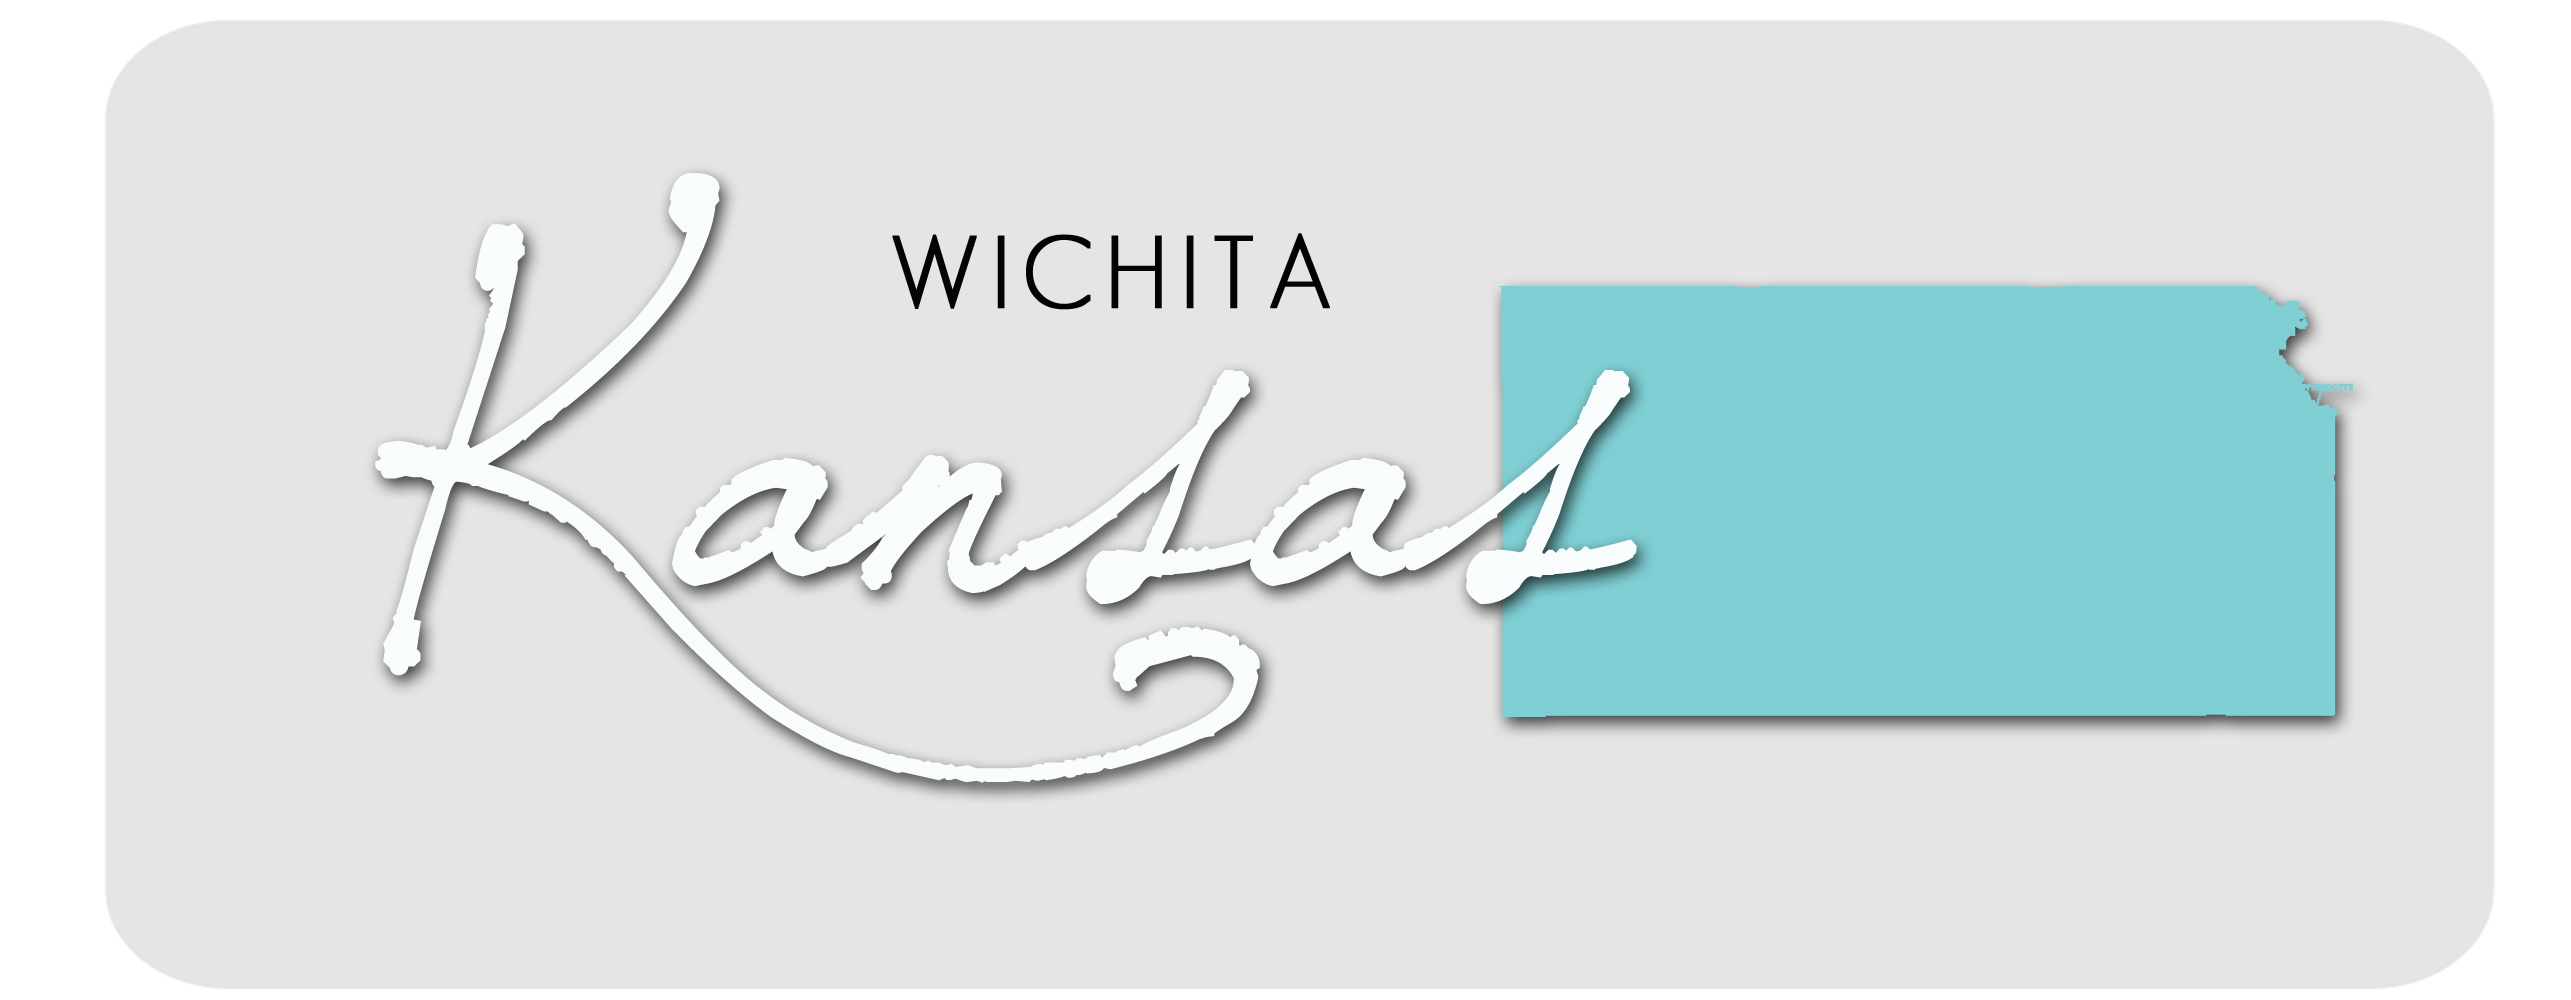 wichita health insurance